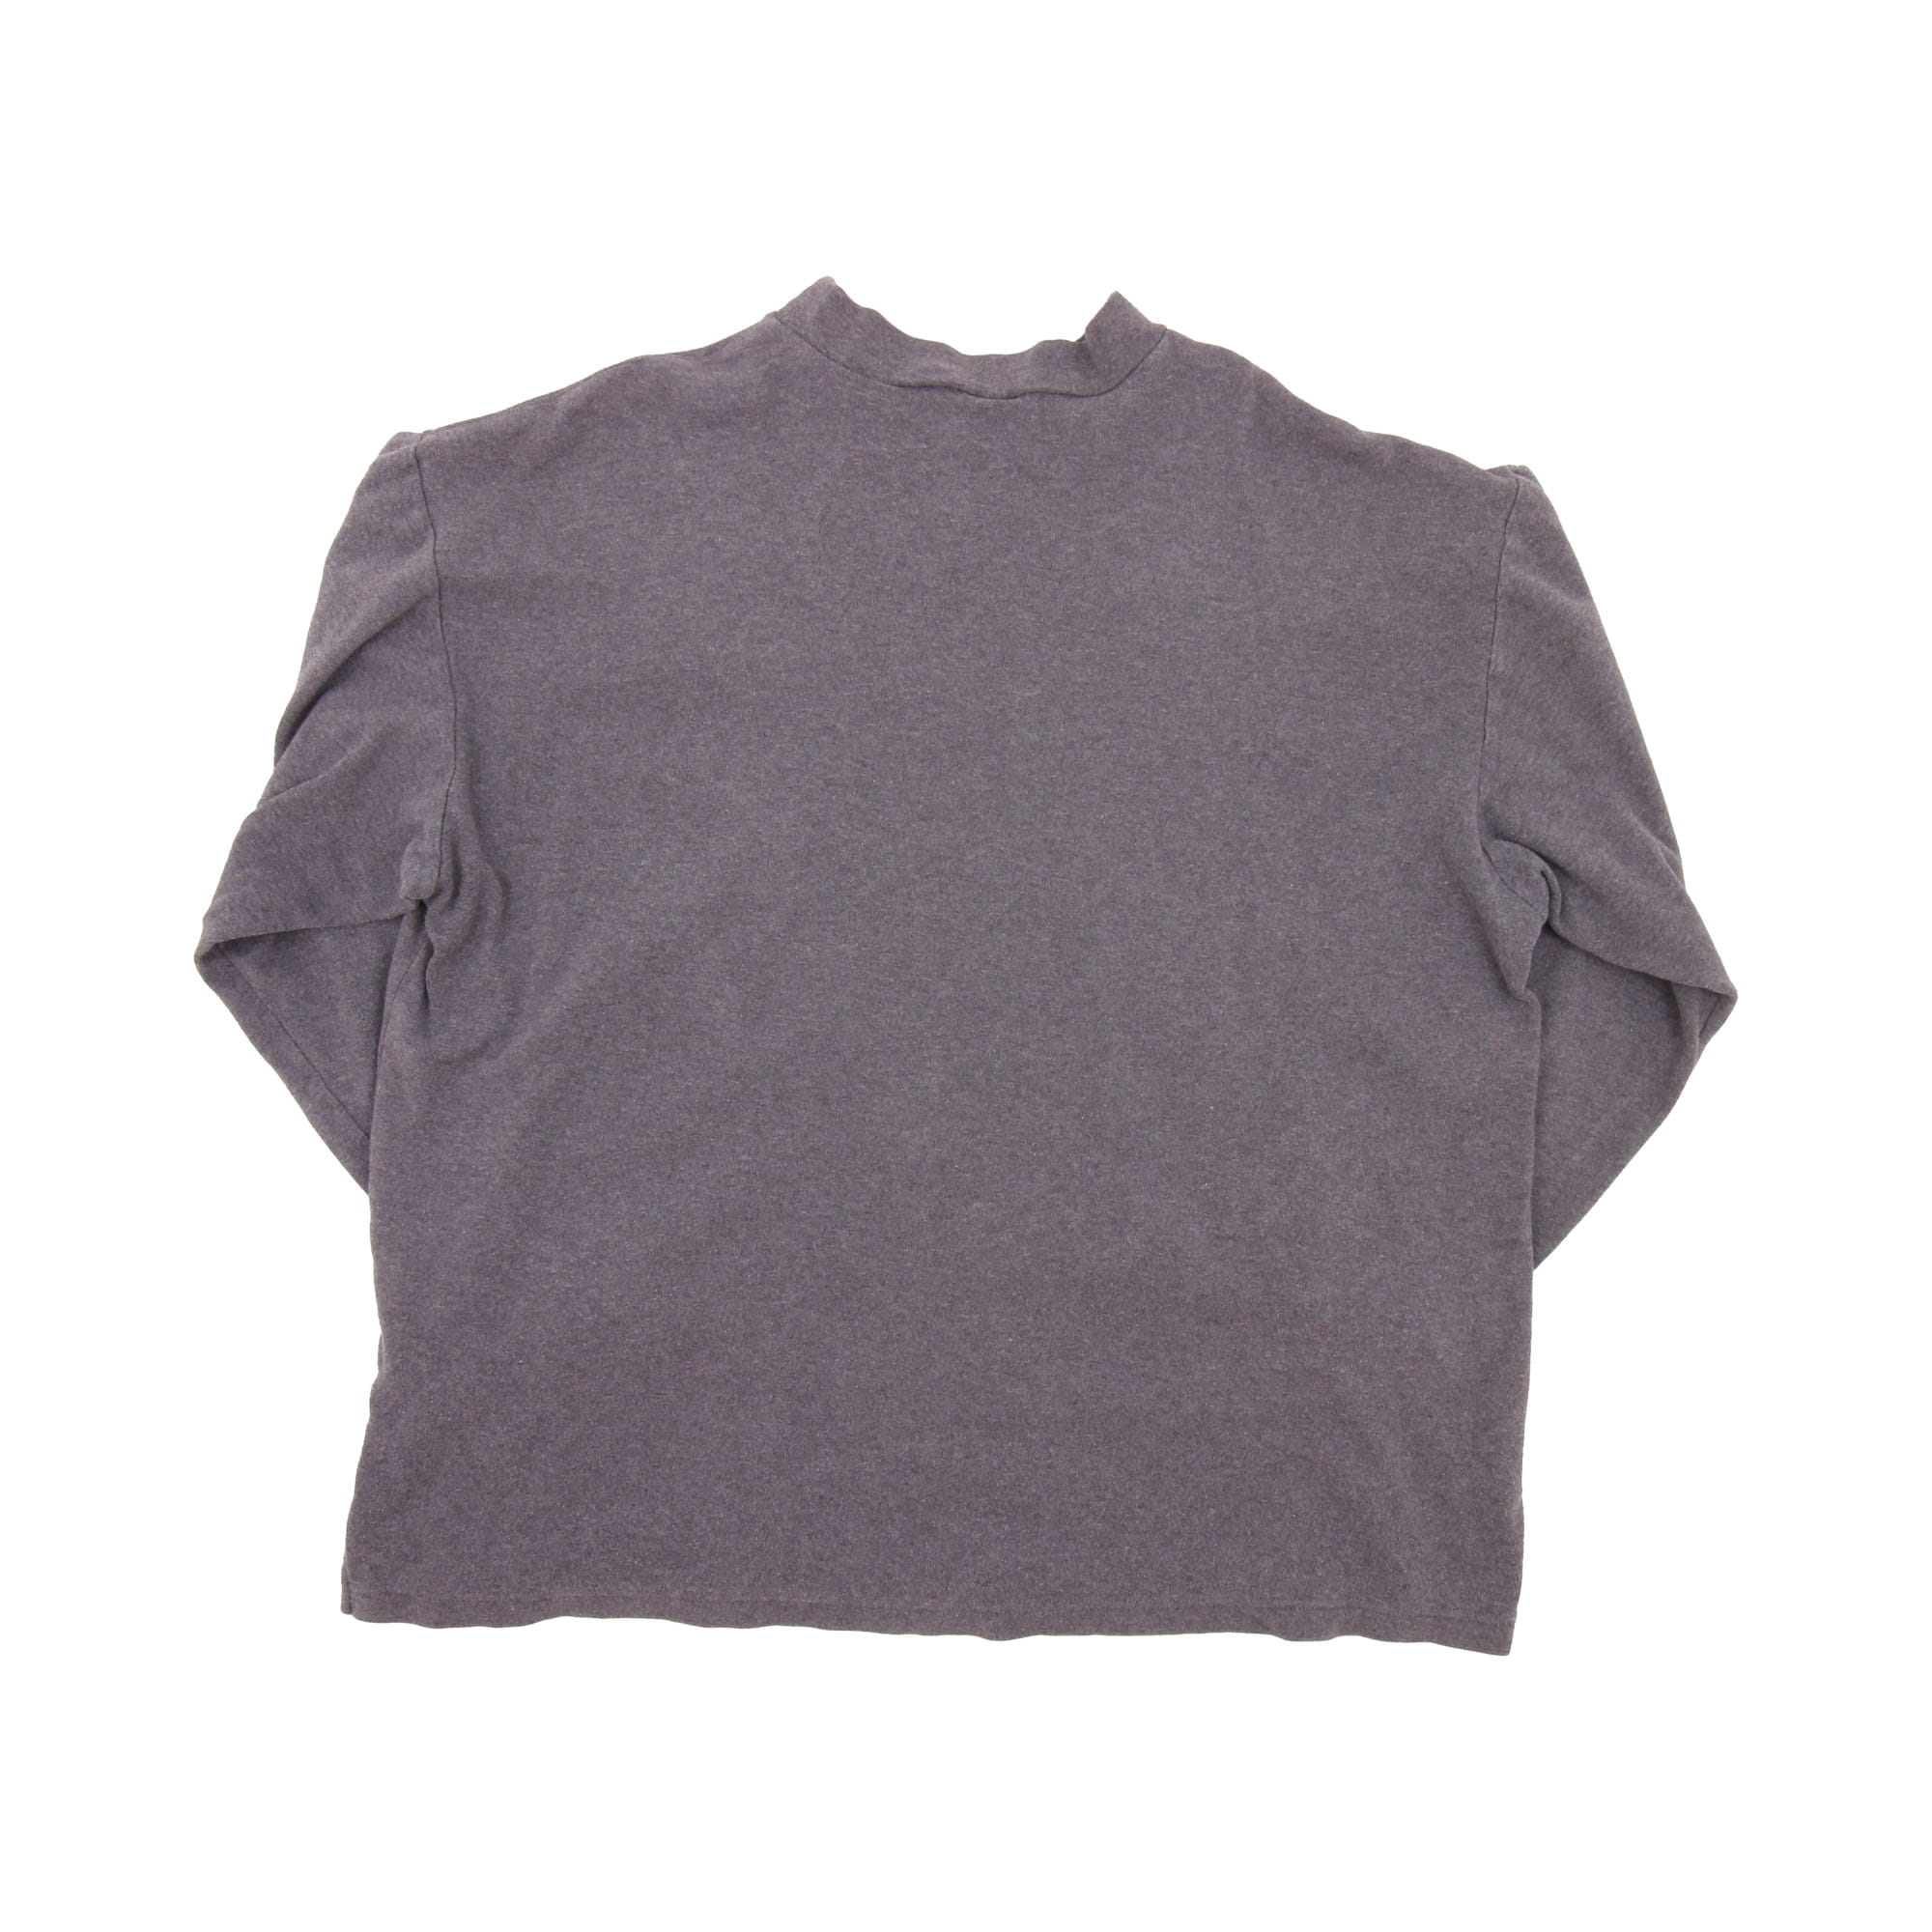 Nike Bear's Best Sweatshirt Grey -  L/XL